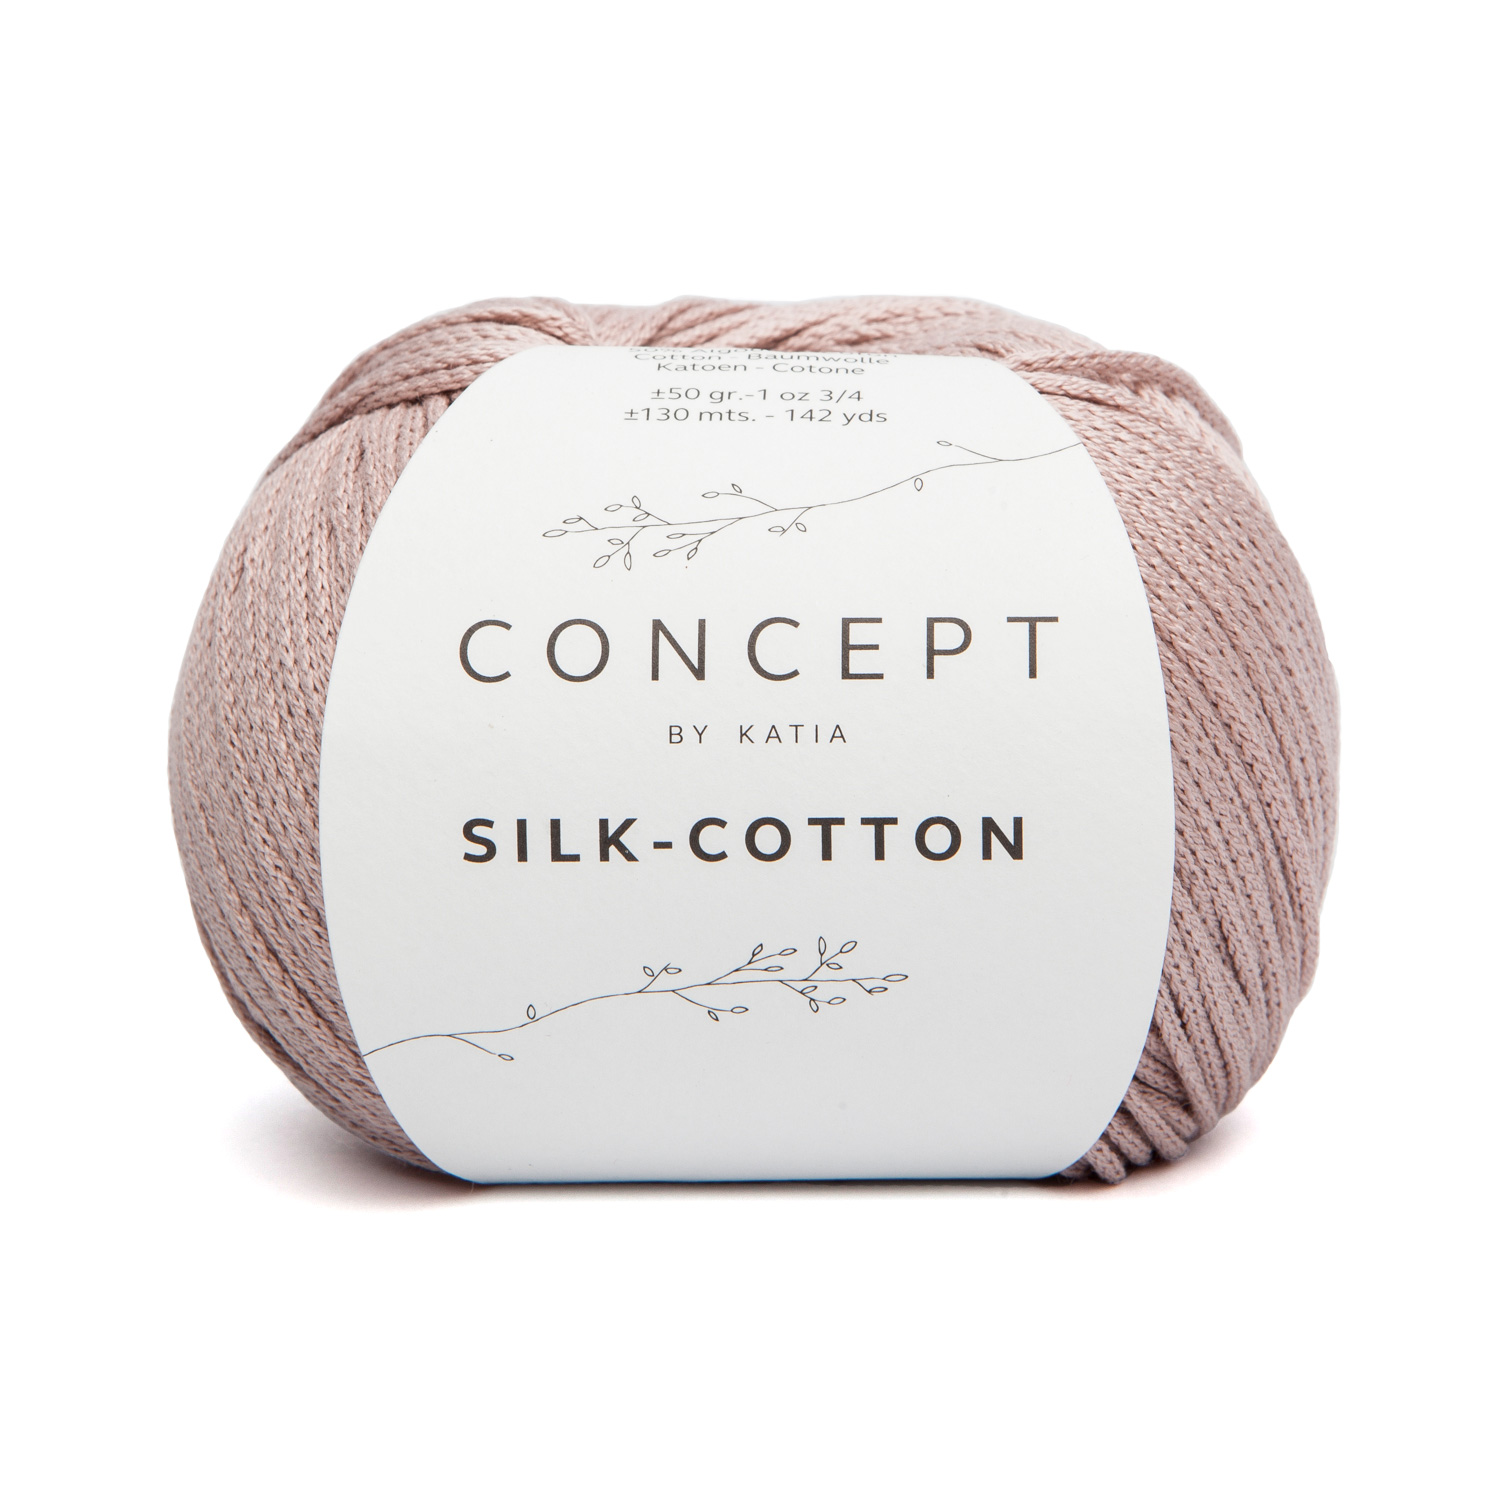 https://www.katia.com/files/lanas/906/yarn-wool-silkcotton-knit-cotton-silk-medium-rose-spring-summer-katia-71-g.jpg